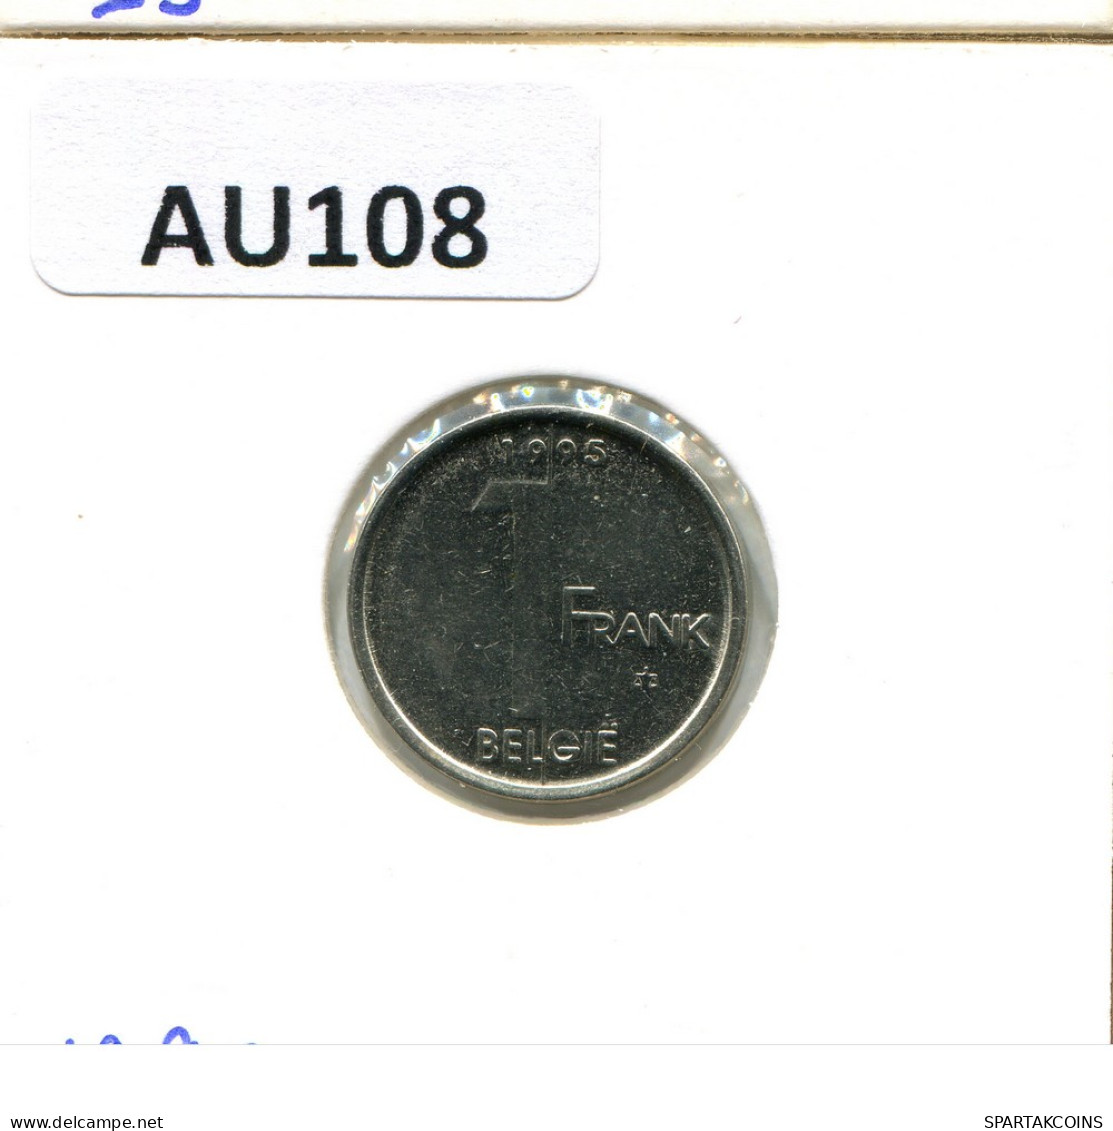 1 FRANC 1995 DUTCH Text BELGIUM Coin #AU108.U - 1 Frank